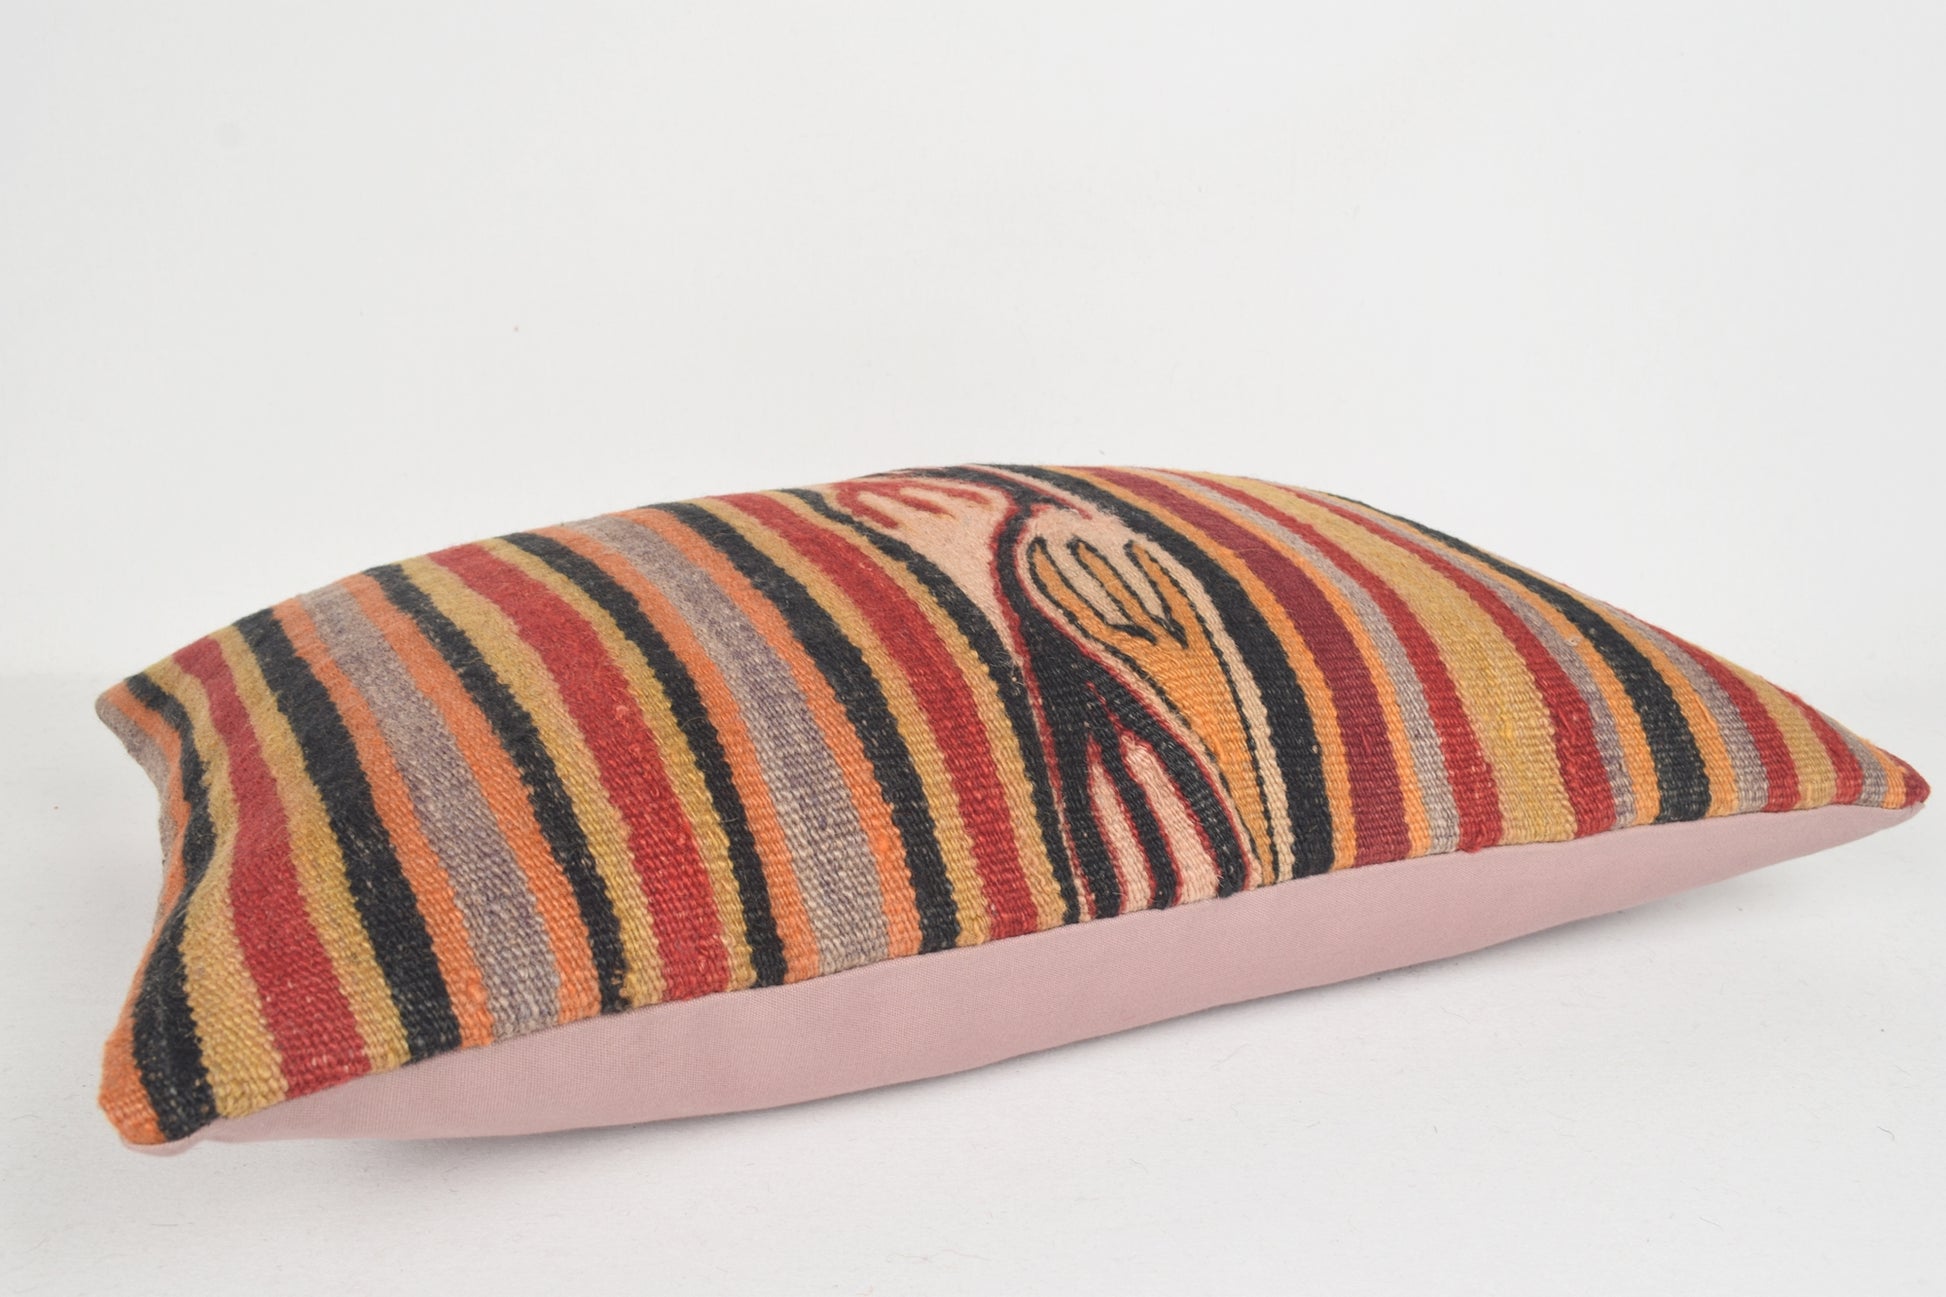 Kilim Cushions Wholesale E00214 Lumbar Woven Folkloric Collection